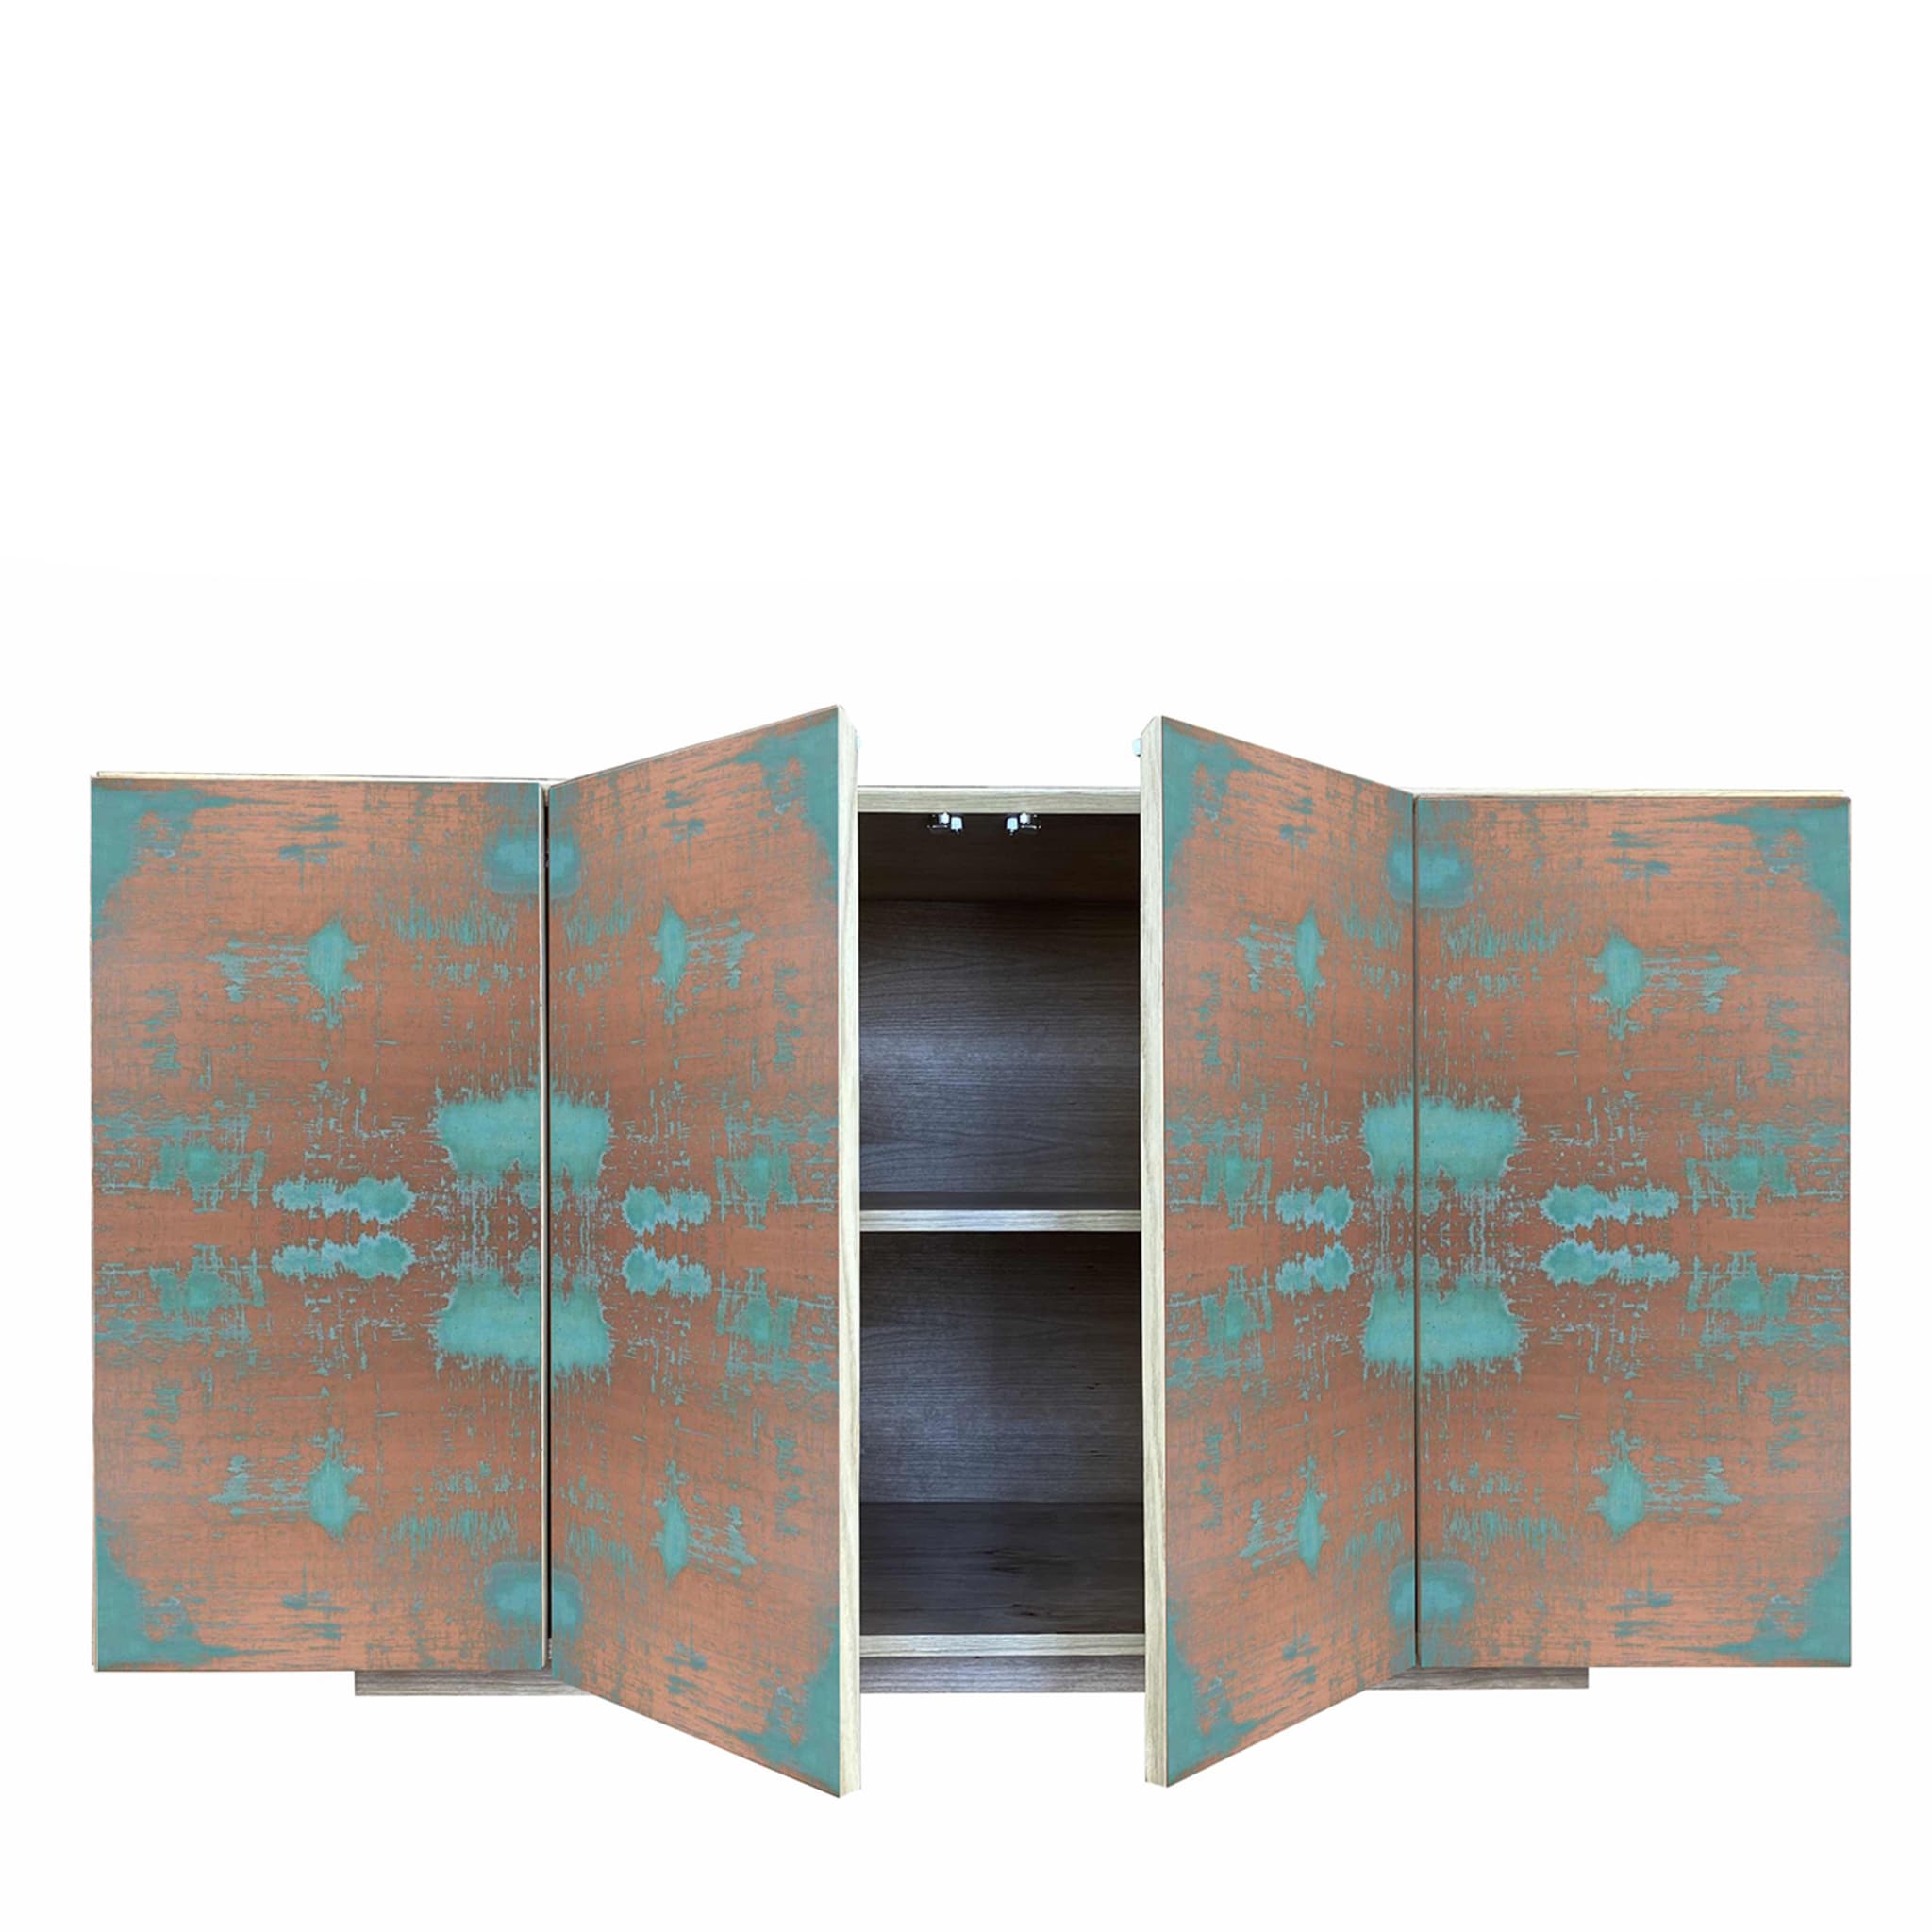 Boccadarno Due 4-Door Turquoise Sideboard by Meccani Studio - Alternative view 5